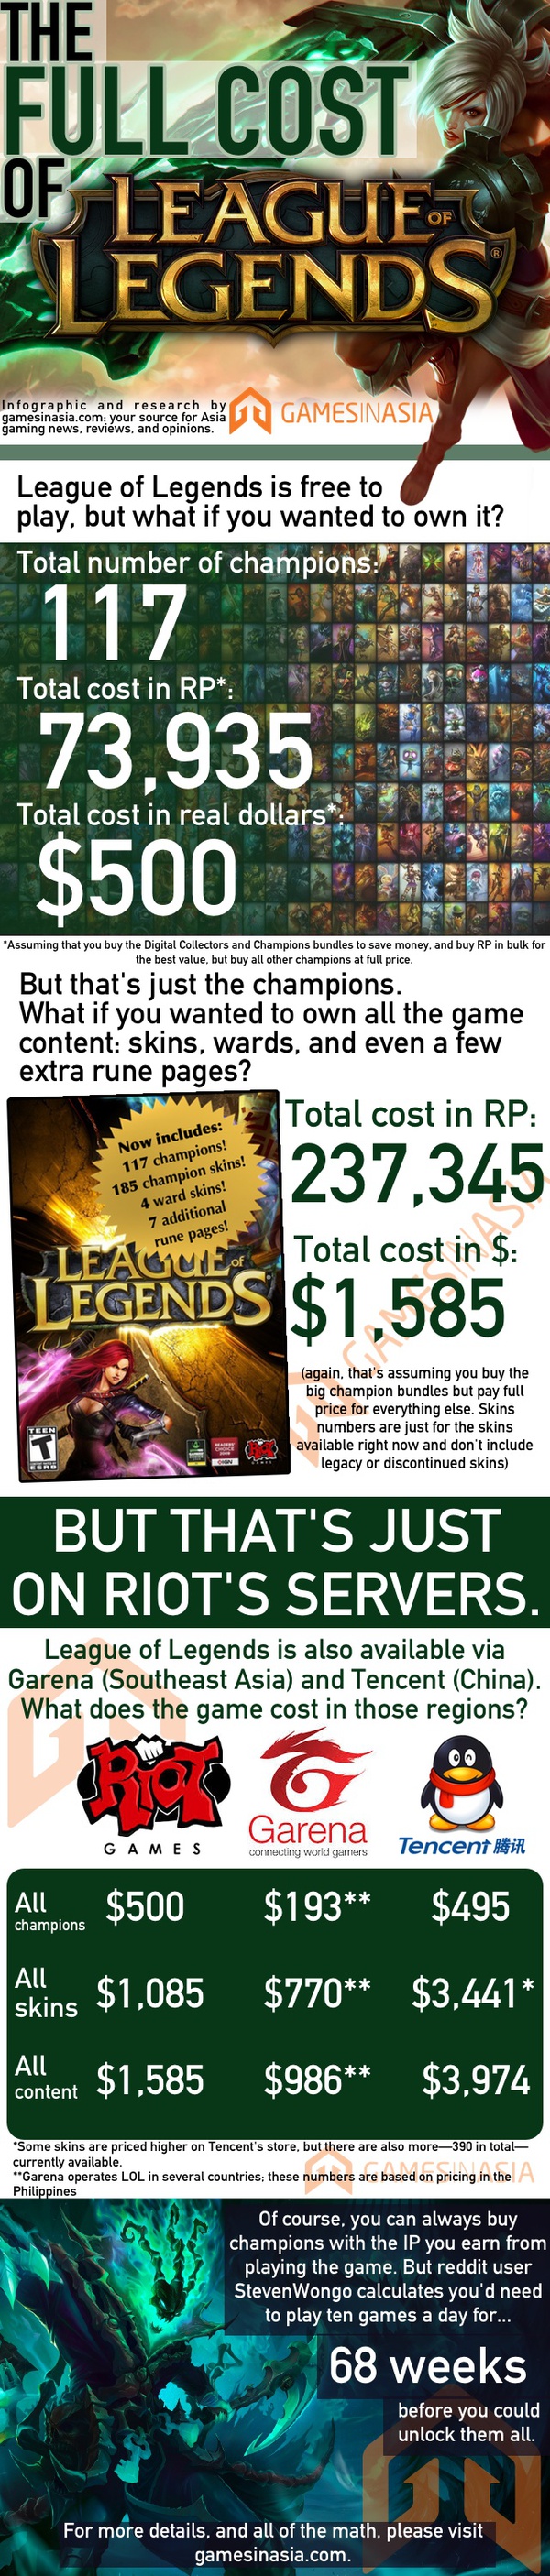 Cái giá thật sự của League of Legends 1